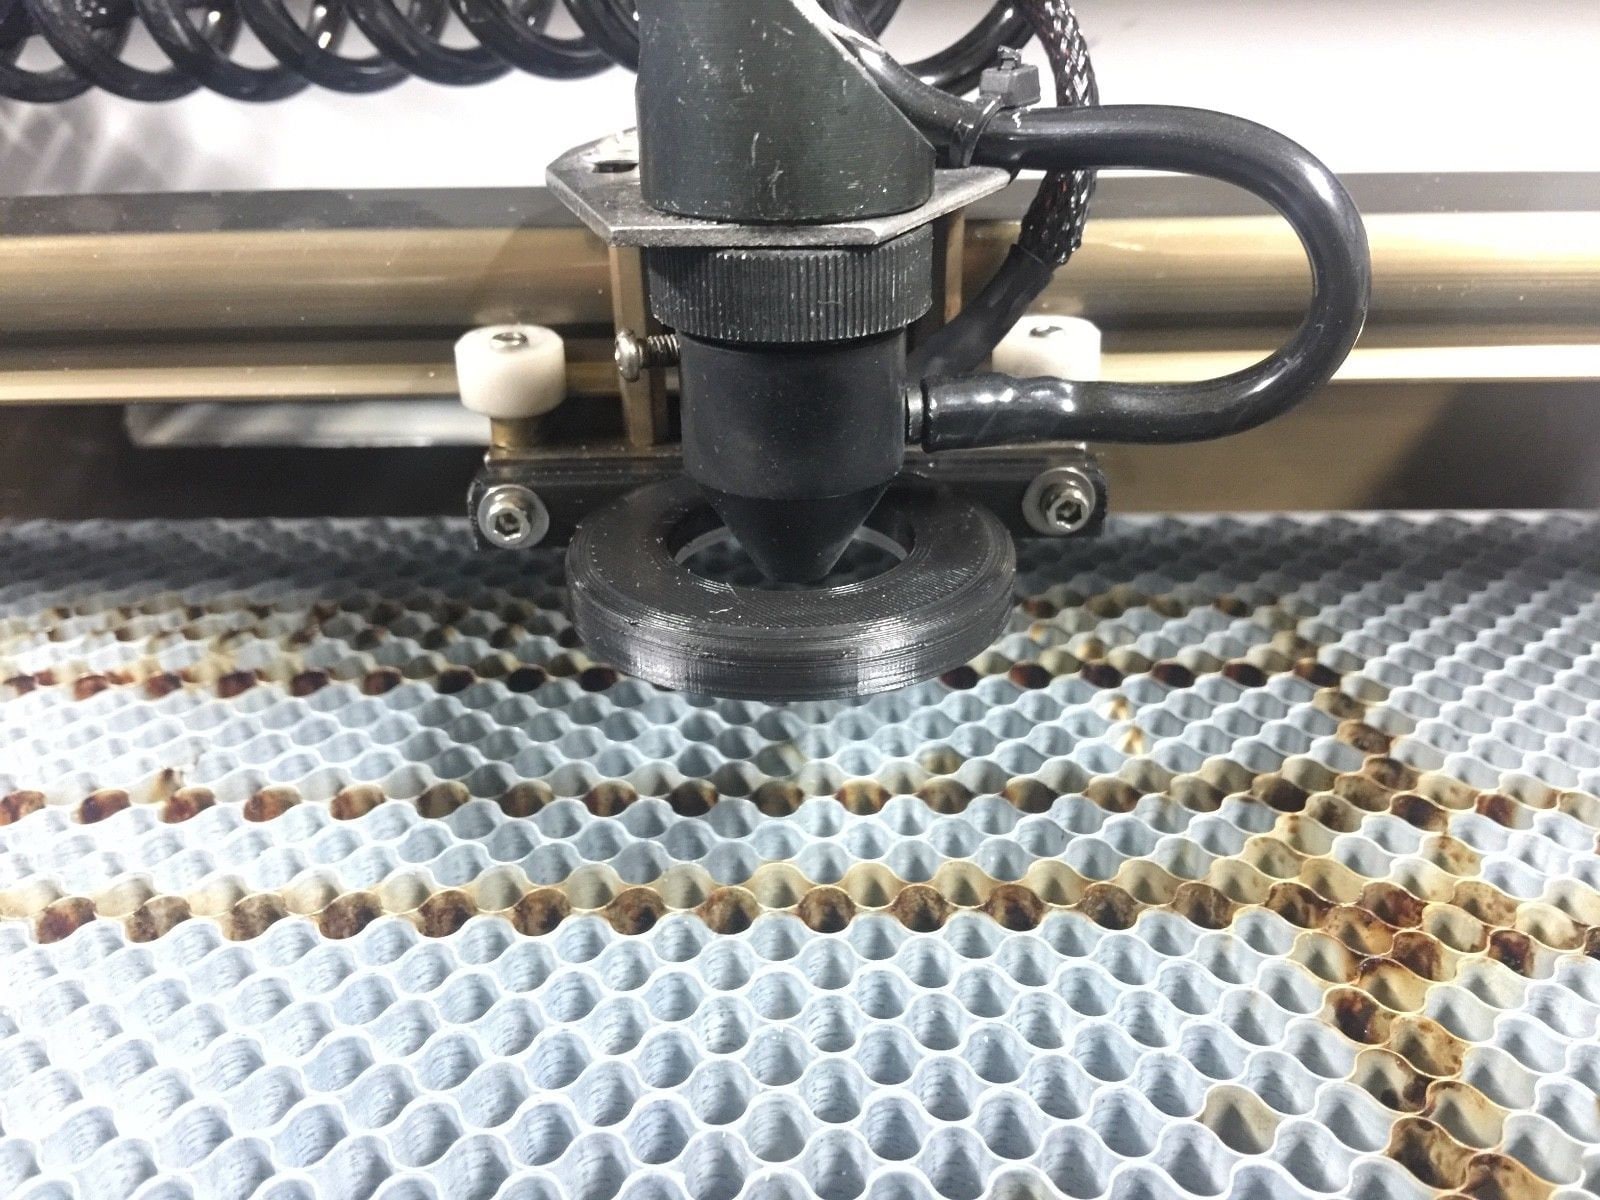 K40 / 40watt C02 Chinese Engraver Laser Cutter Drag Chain Attachment 